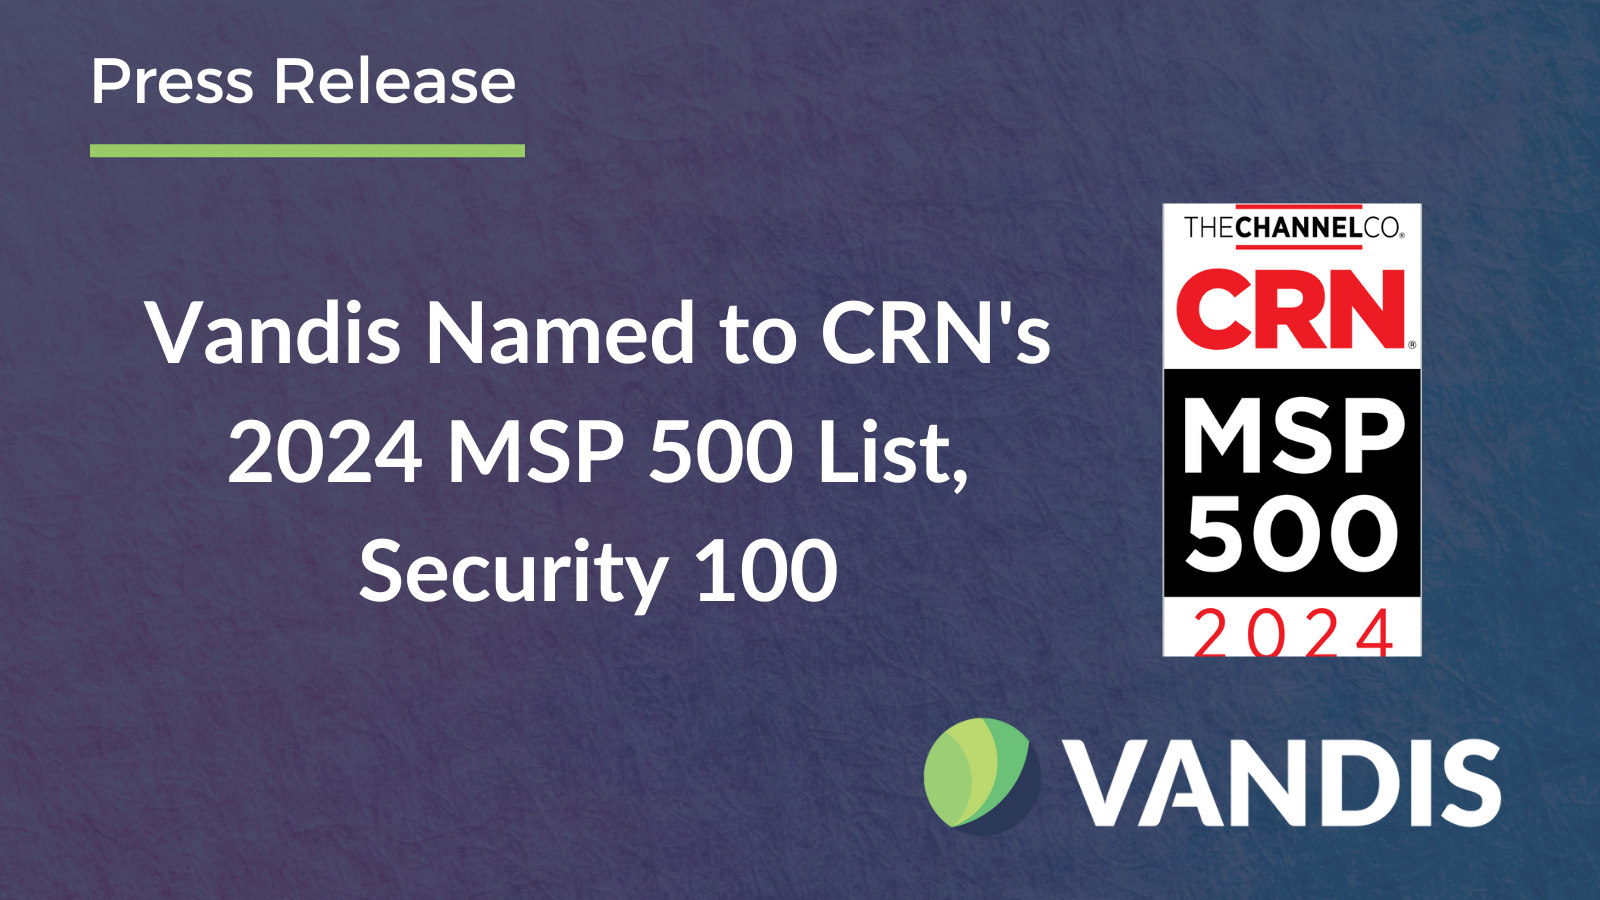 Vandis Named to CRN's 2024 MSP 500 List